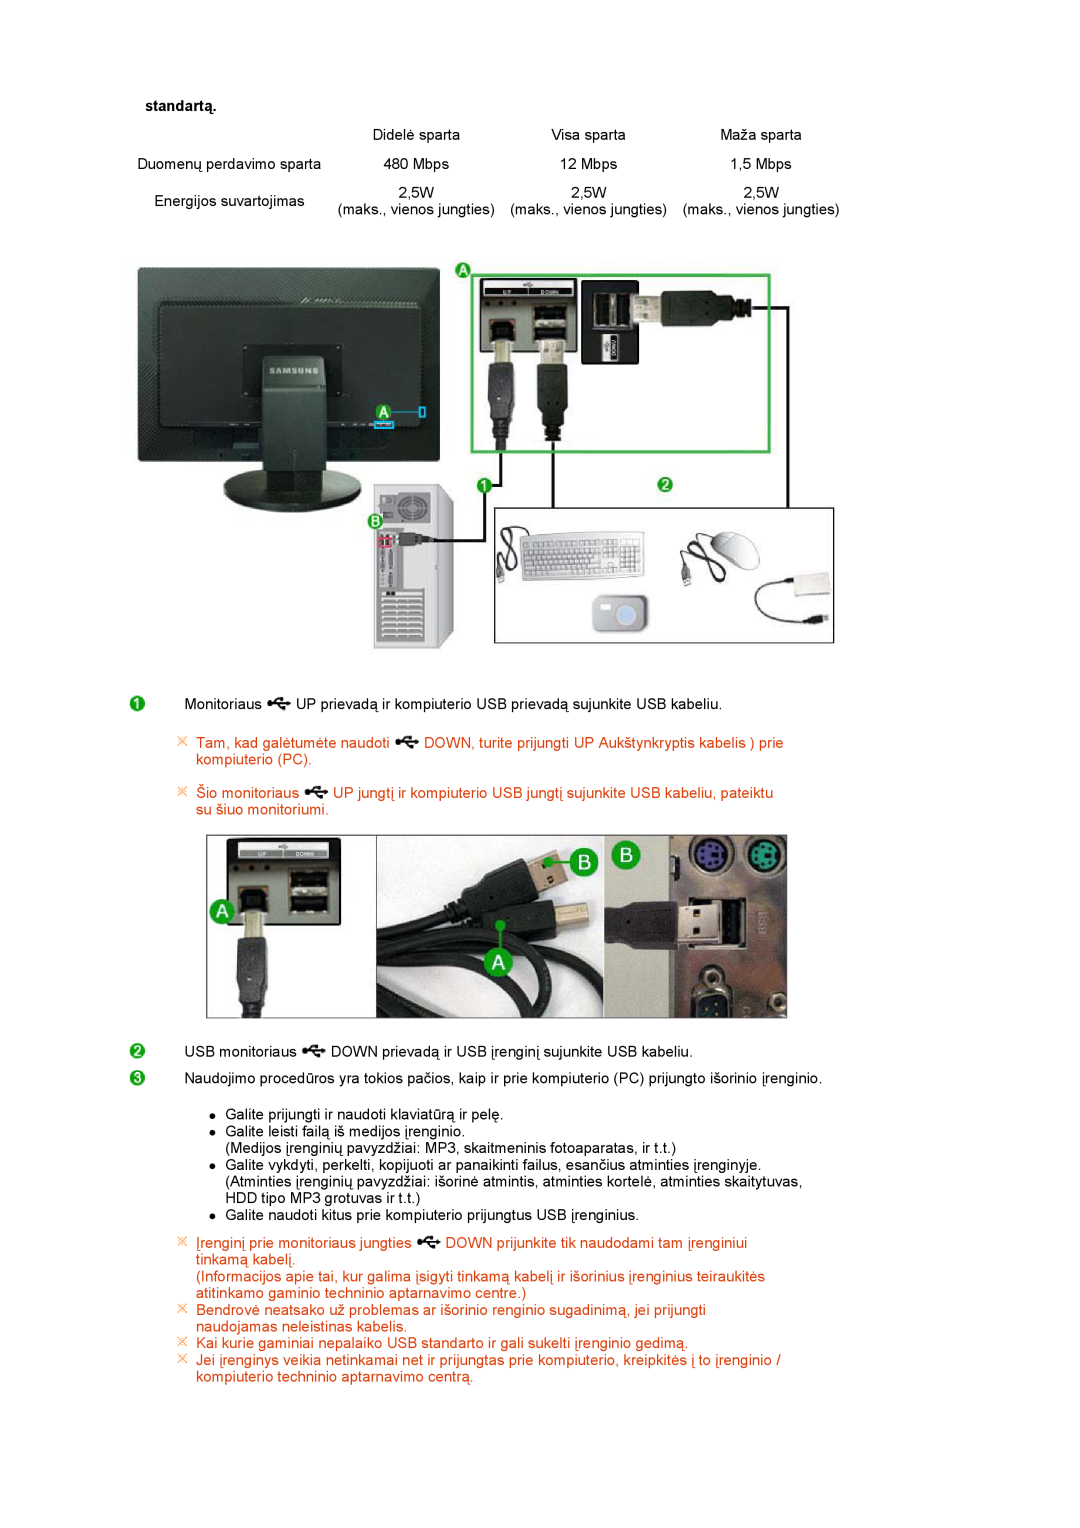 Samsung LS27HUBCB/EDC manual standartą, Visa sparta 